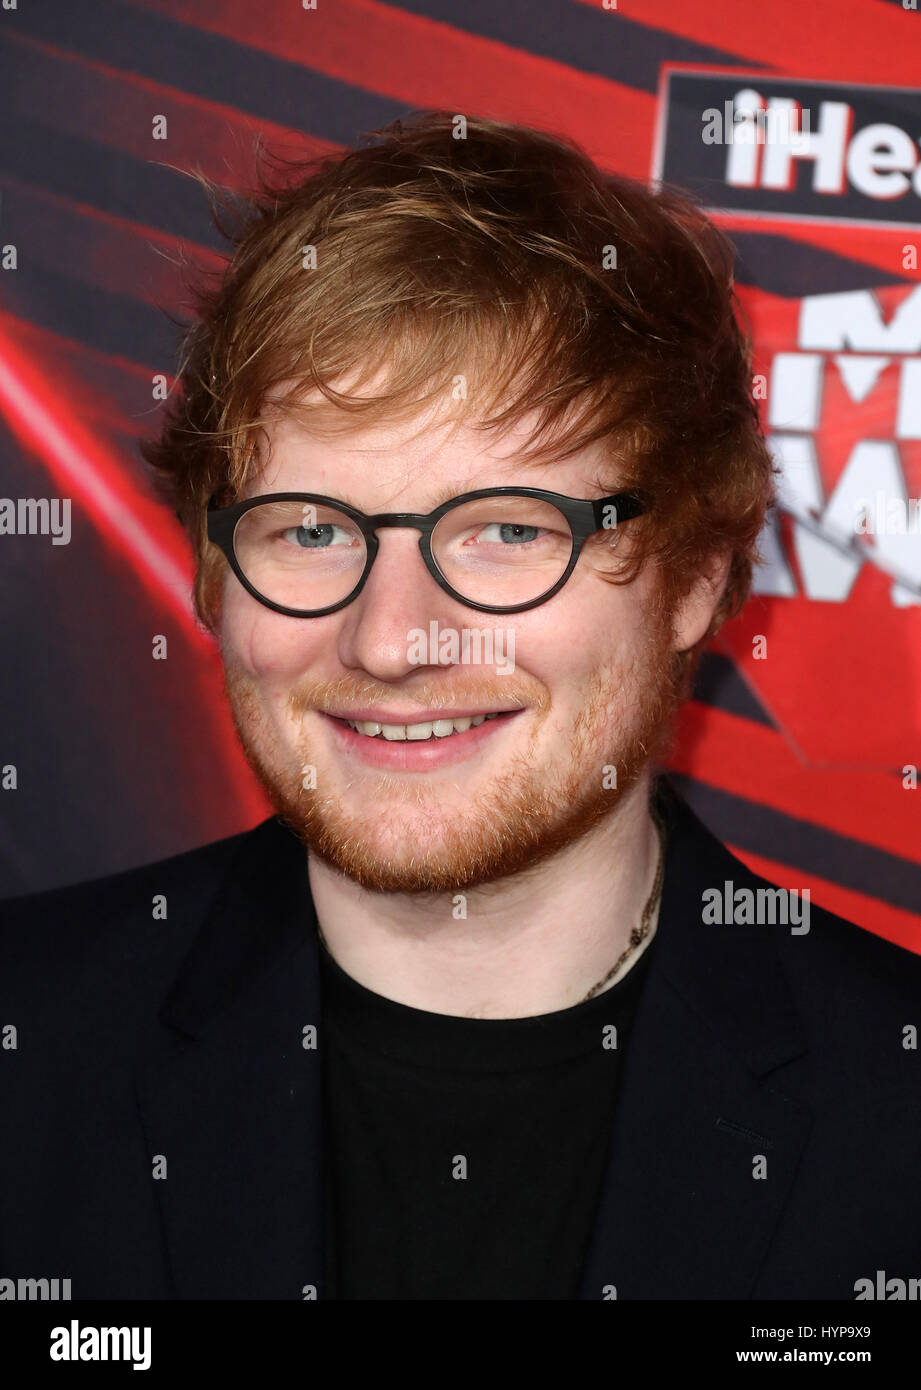 2017 iHeartRadio Music Awards Featuring: Ed Sheeran Where: Los Angeles, California, Vereinigte Staaten von Amerika bei: 6. März 2017 Stockfoto